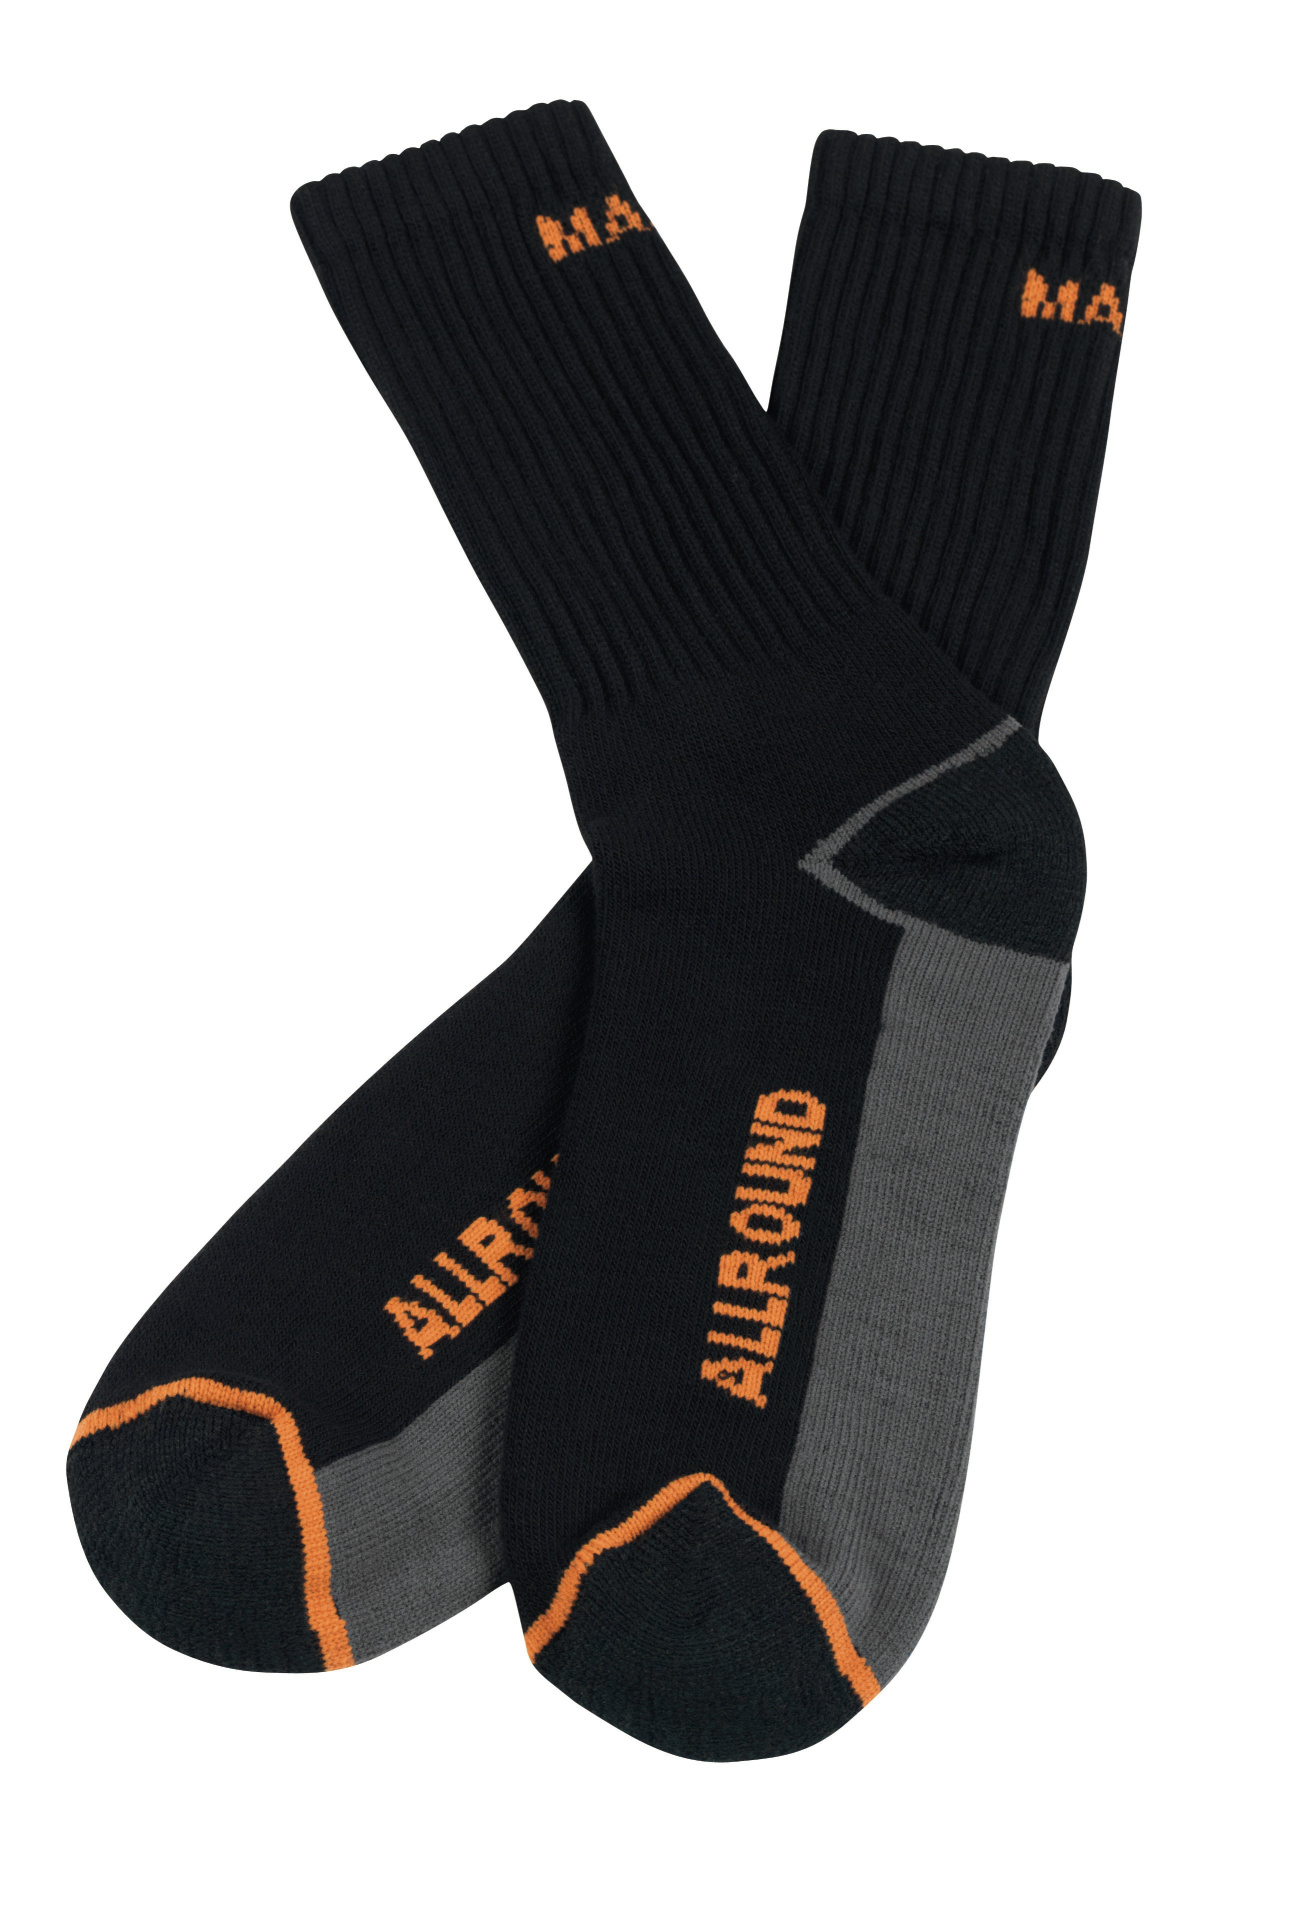 MASCOT Compete Socken "Mongu" Nr. 50454-913-09